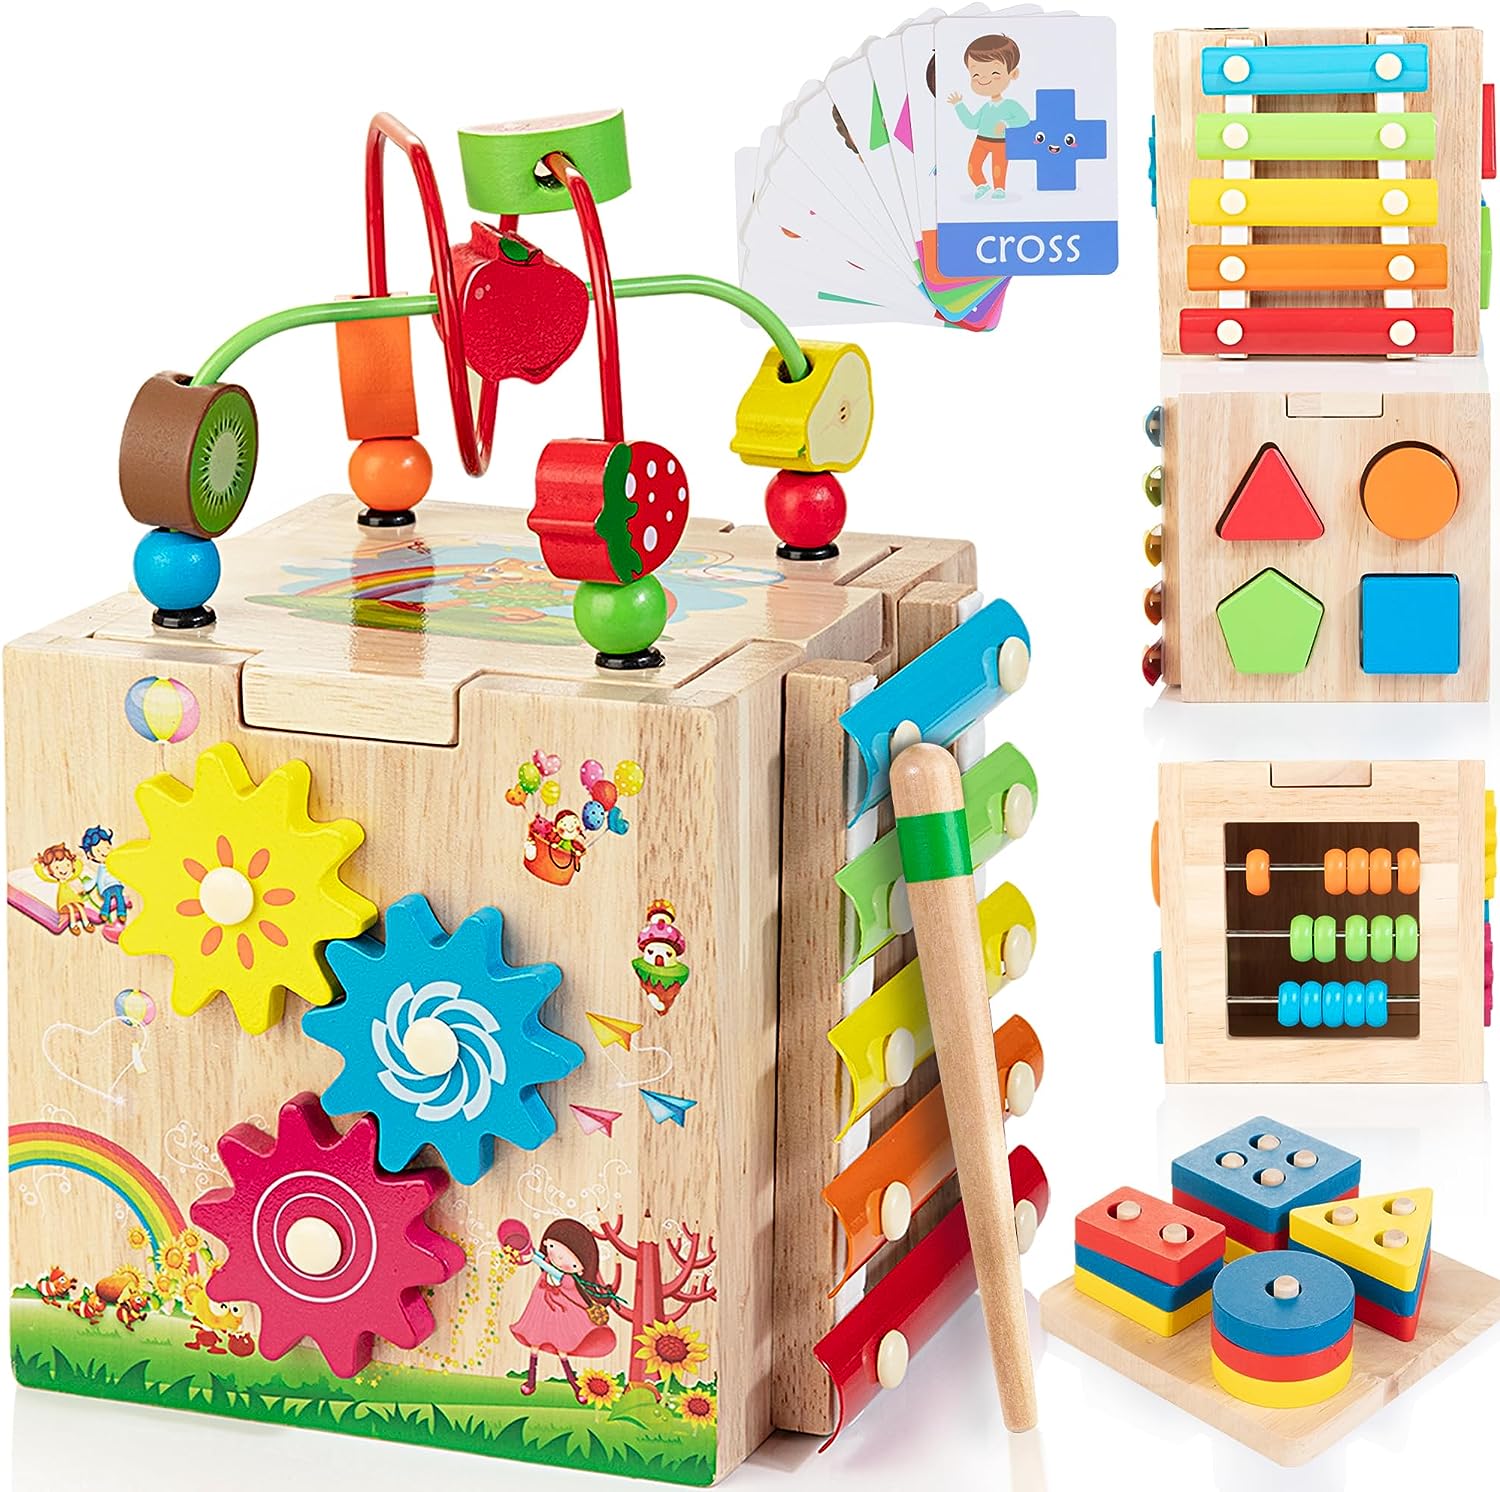 Montessori-Toys-9-Months-old